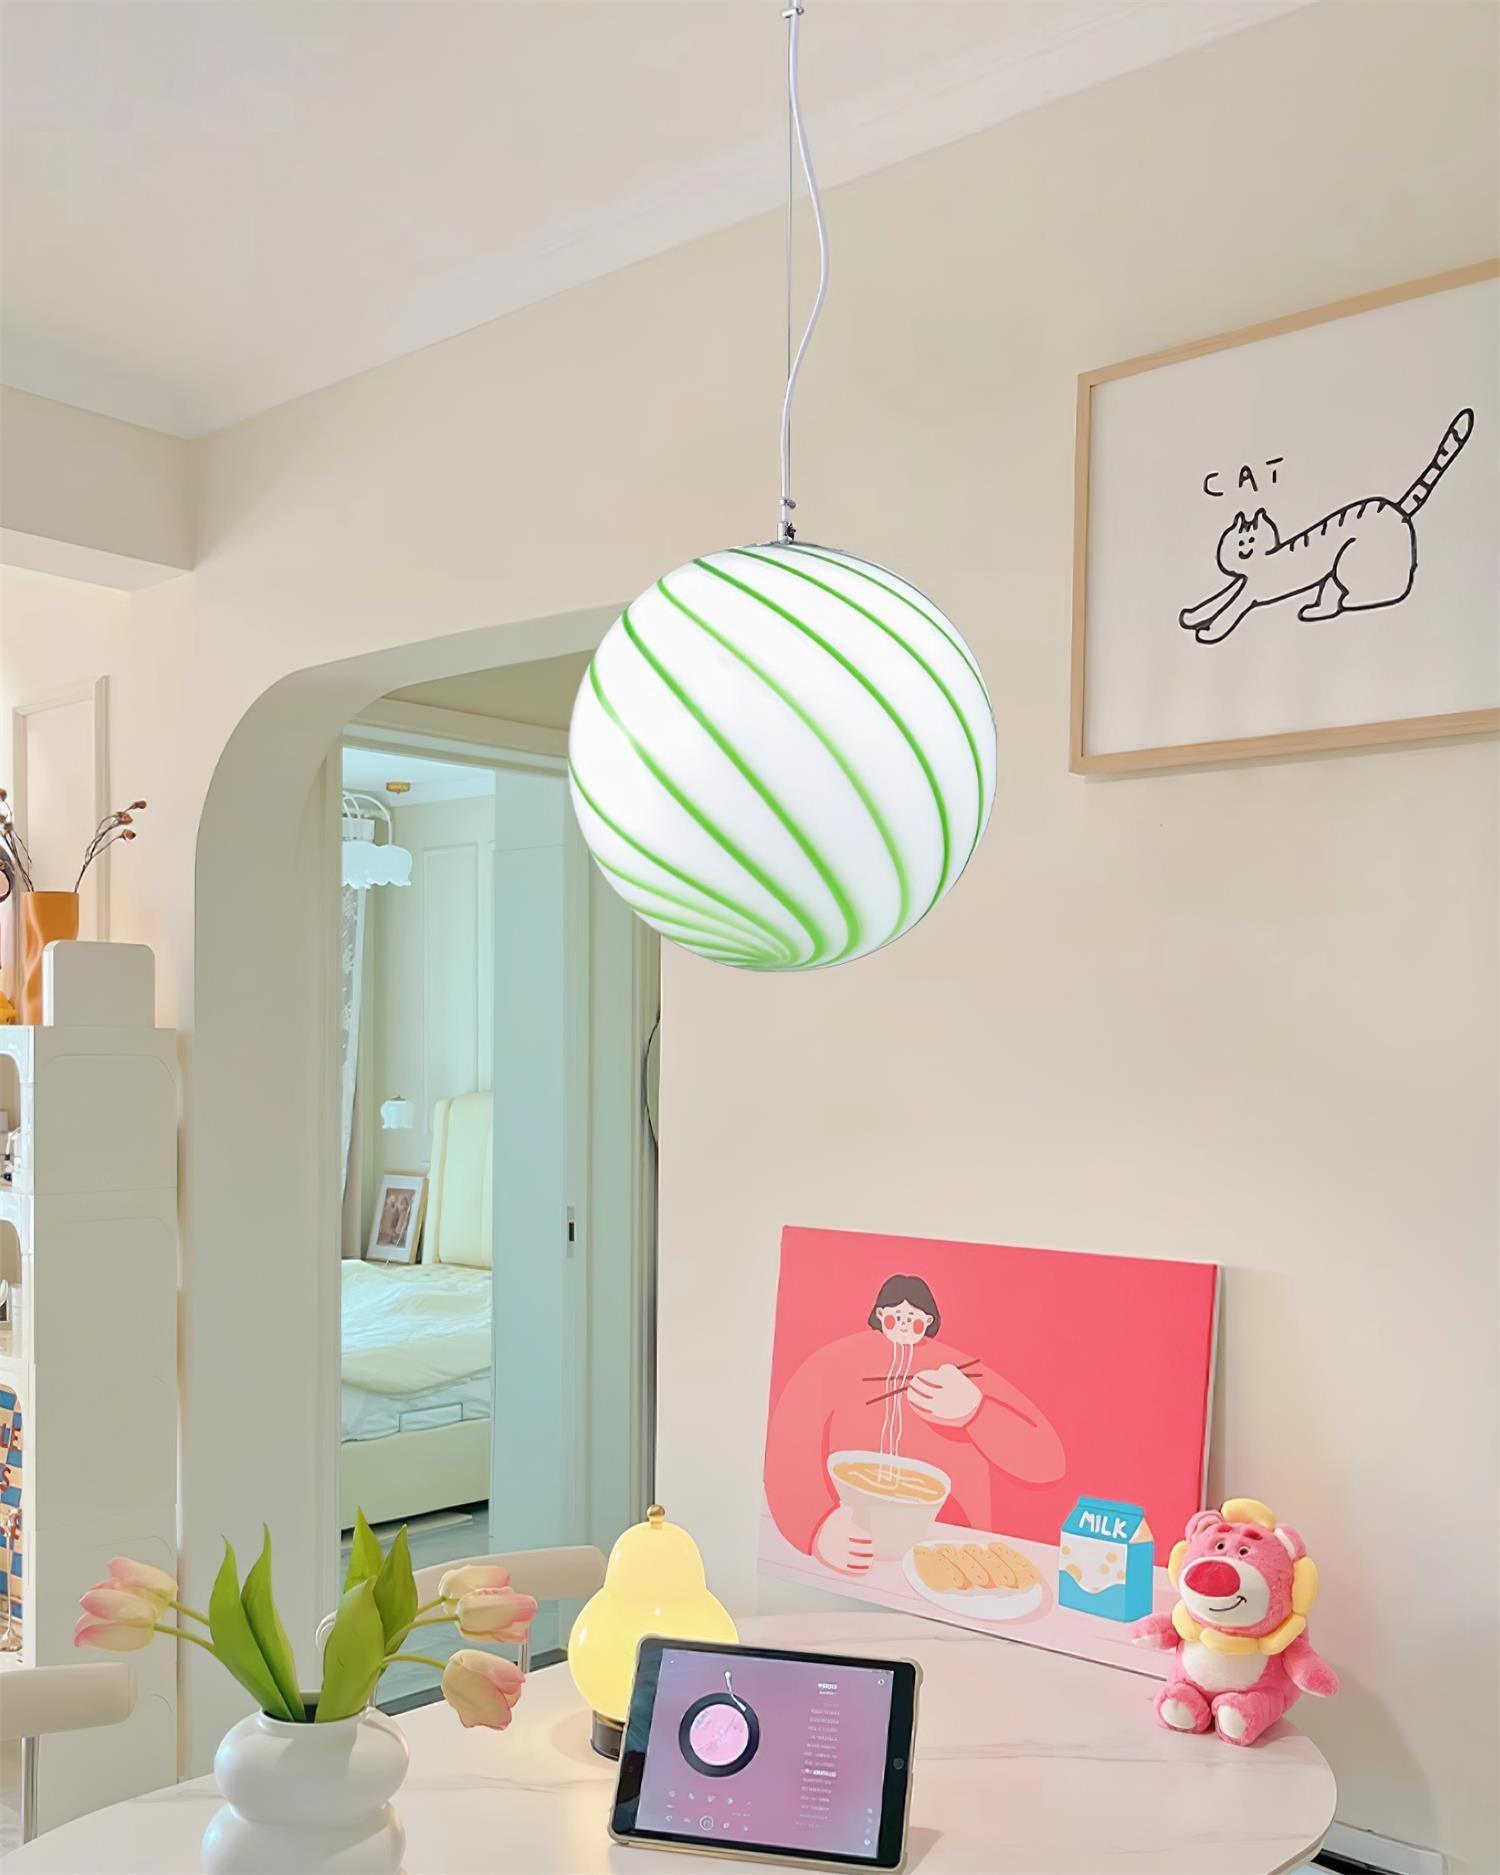 Lollipop Pendant Lamp 11.8″ - Docos